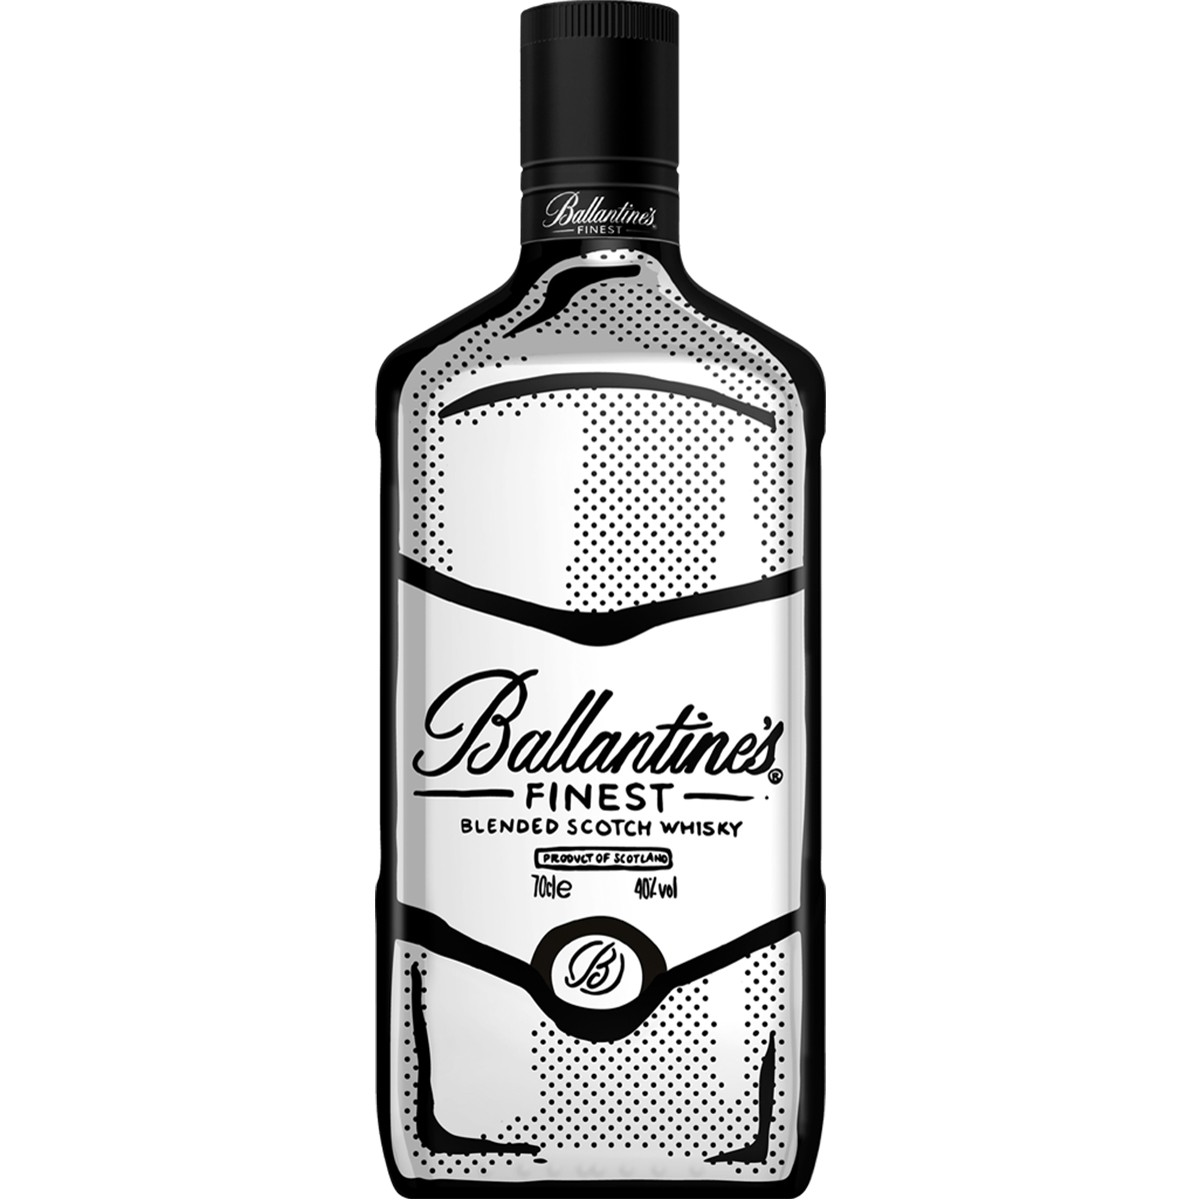 Ballantines Joshua Vides edition whisky, 40%, 1l